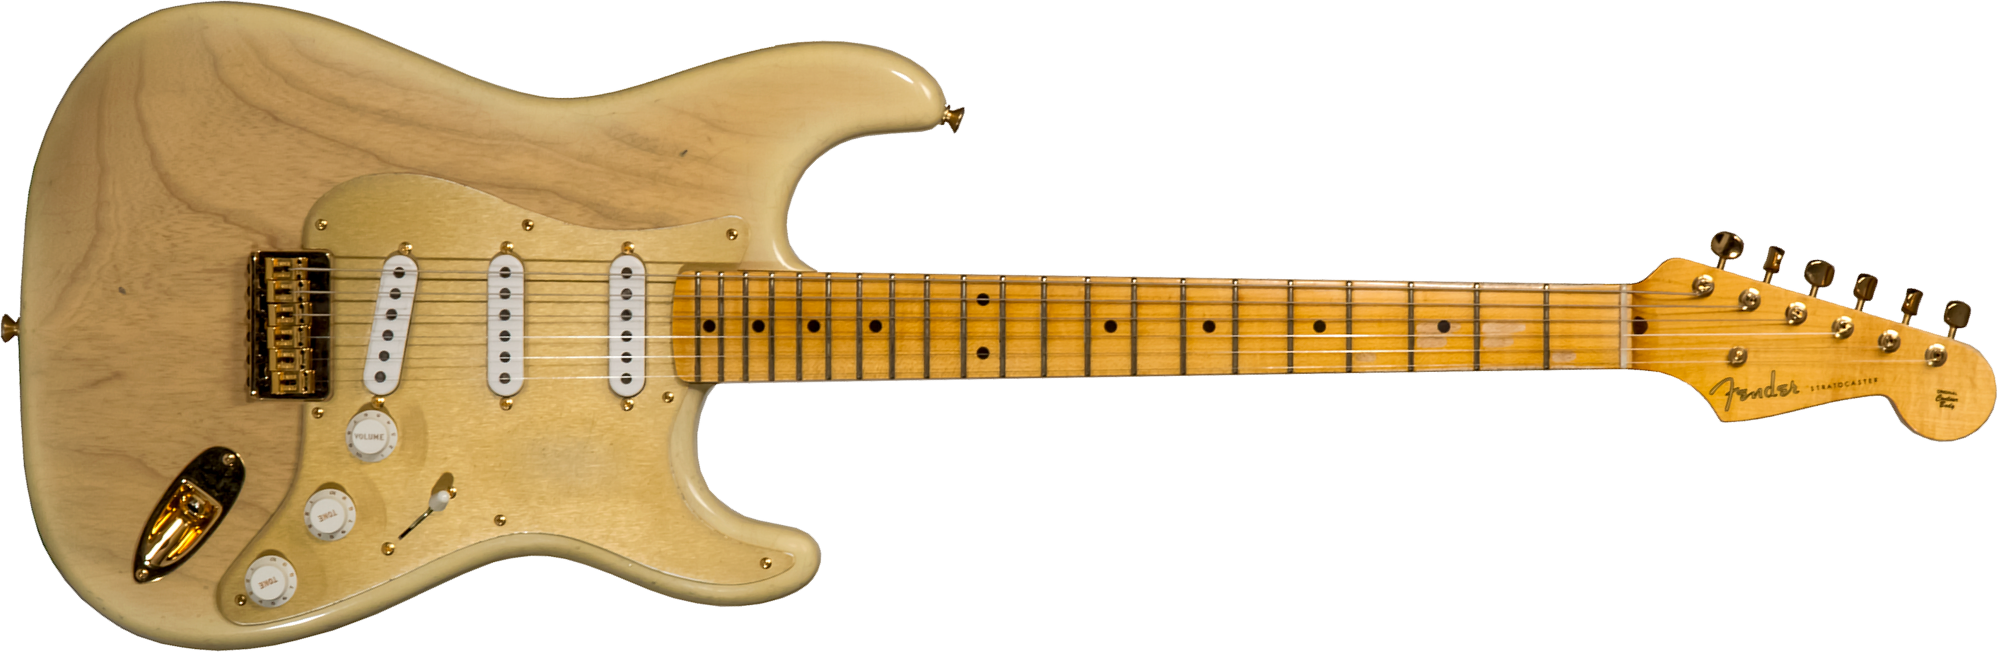 Fender Custom Shop Strat 1955 Hardtail Gold Hardware 3s Trem Mn #cz568215 - Journeyman Relic Natural Blonde - Guitare Électrique Forme Str - Main pict